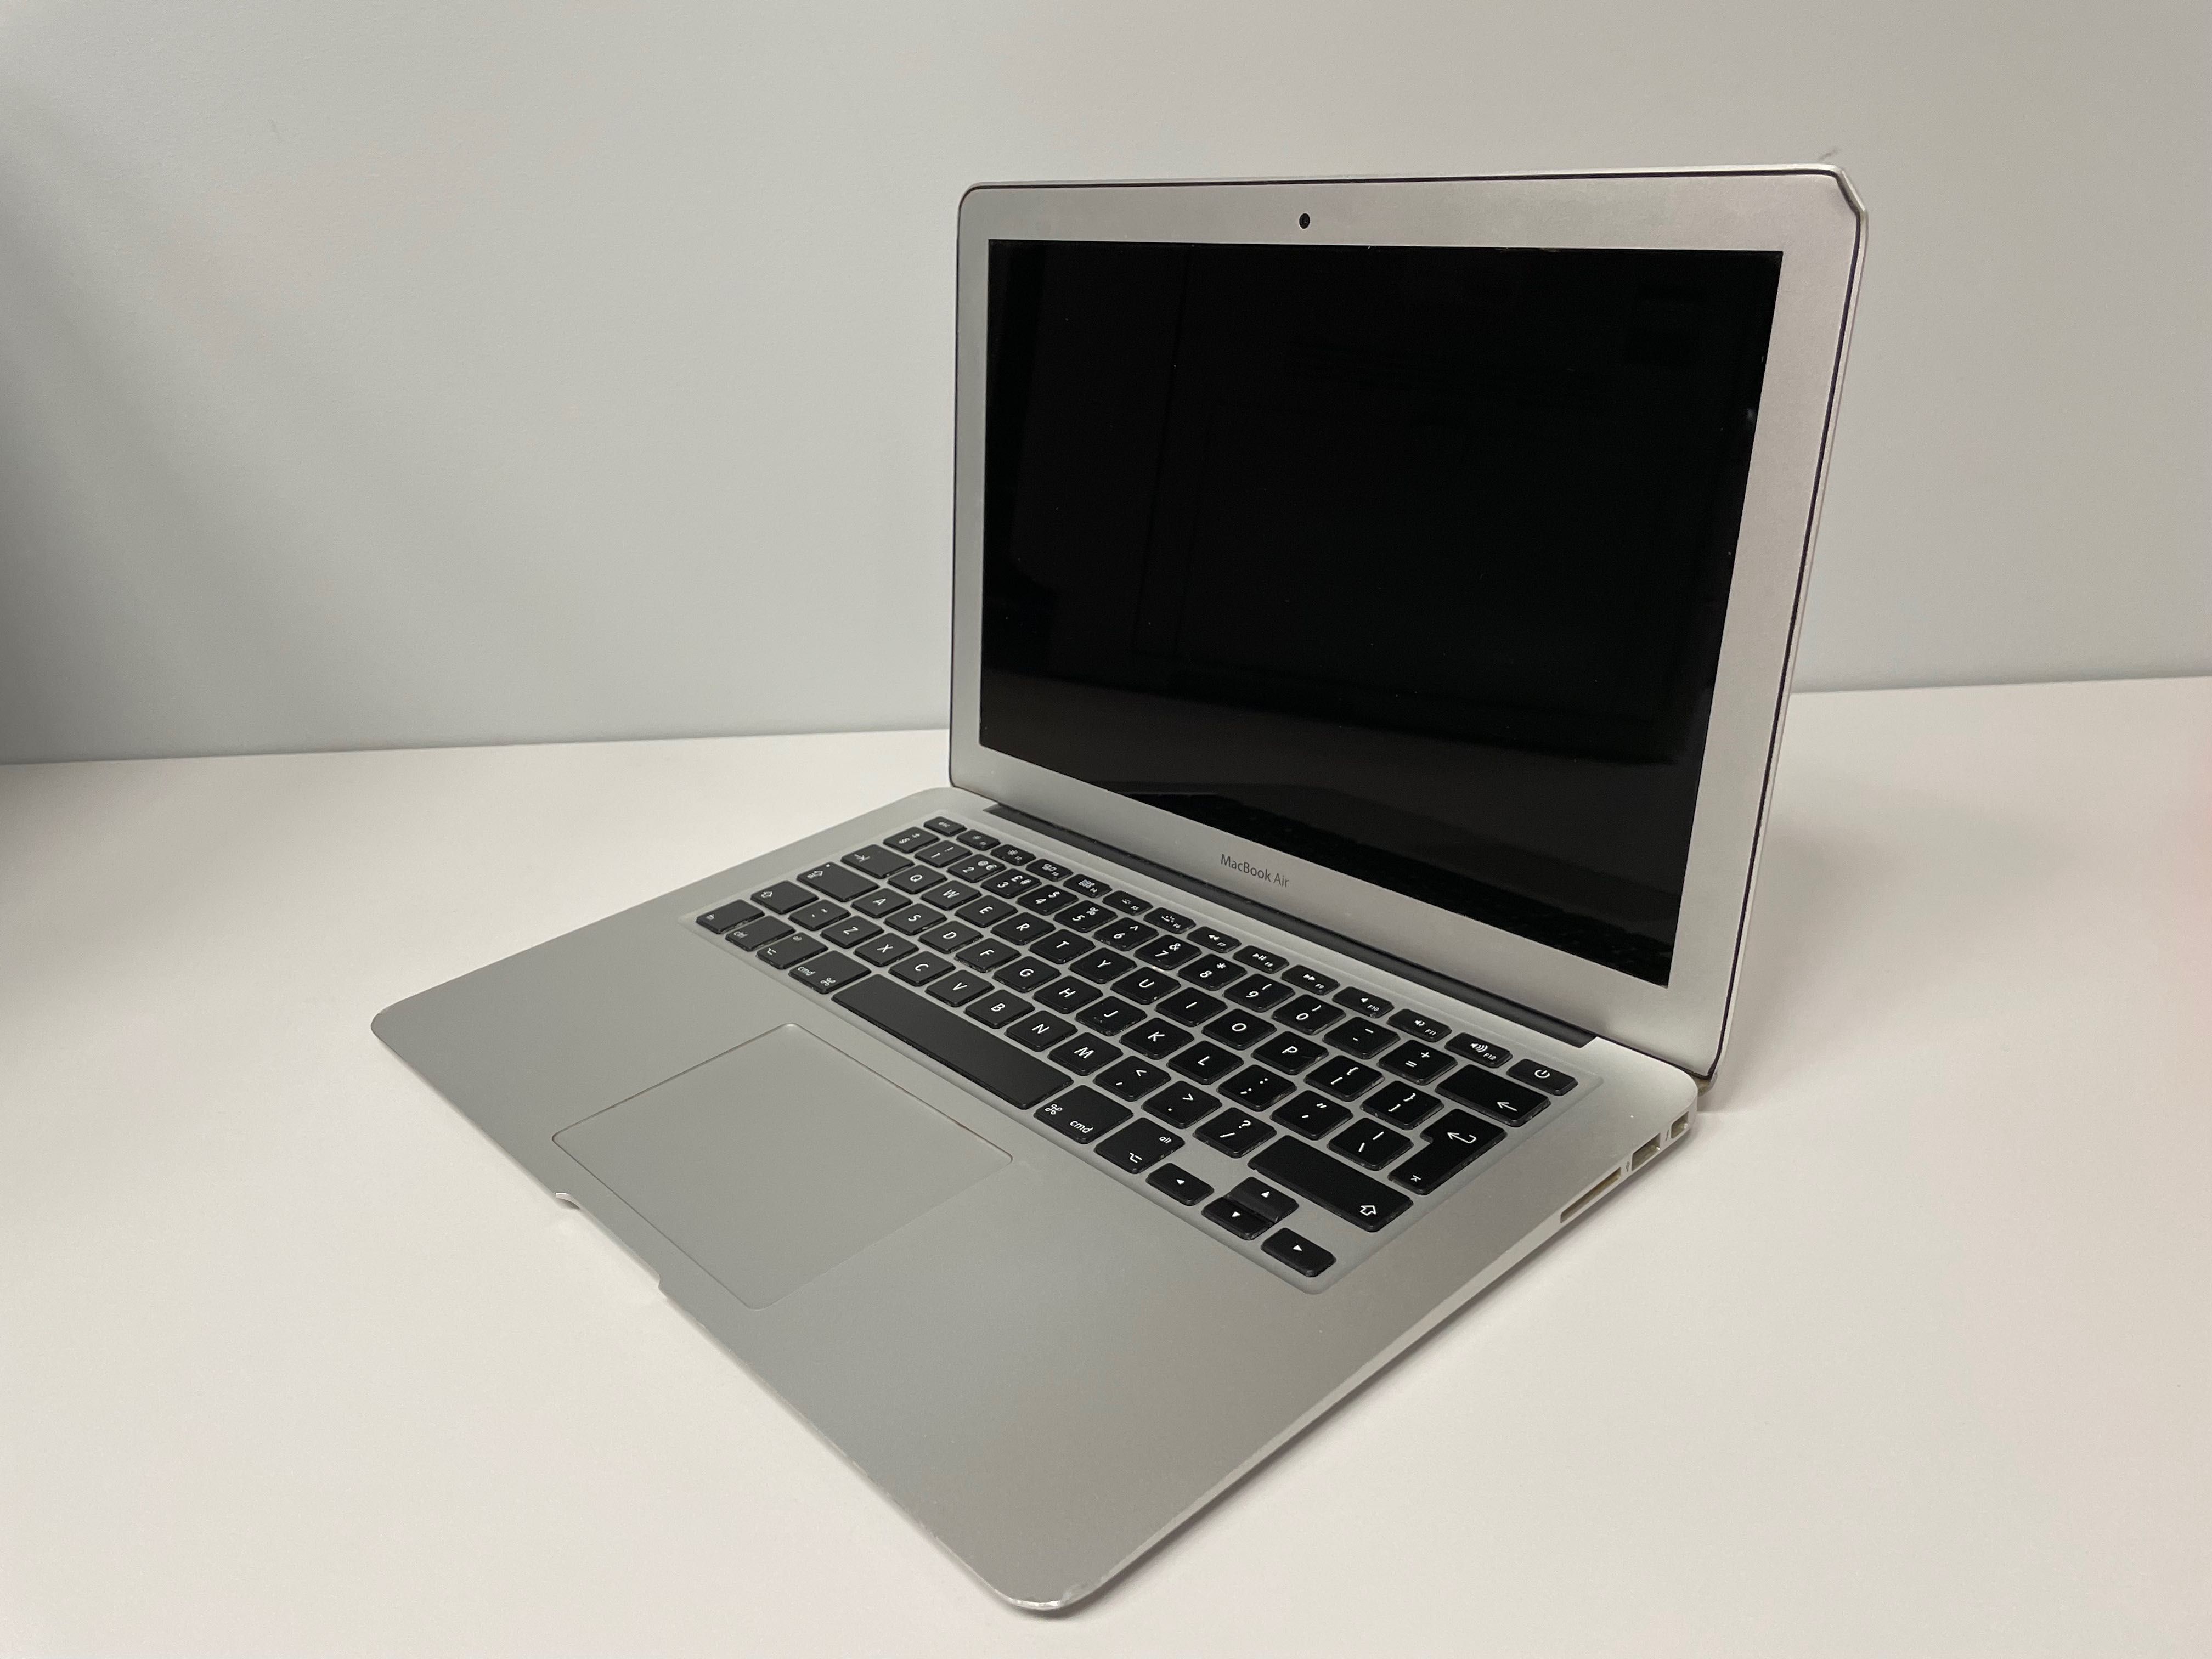 Apple MacBook Air 13 Intel i7 GHz (4650U) 2013 - A1466